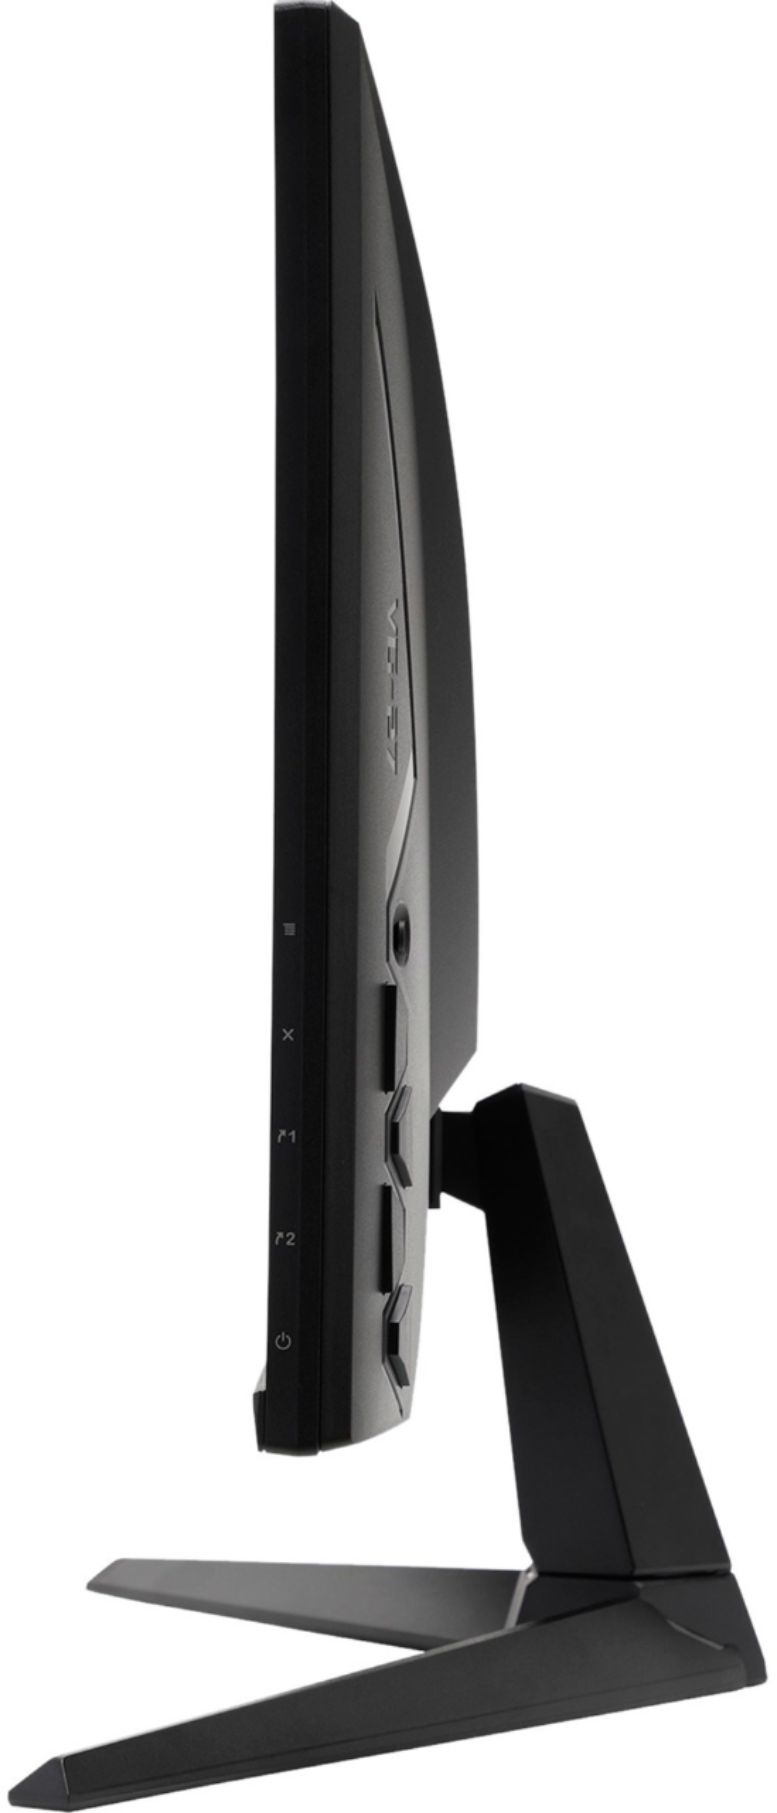 ASUS - TUF Gaming VG27AQ1A 27" IPS WQHD FreeSync and G-SYNC Compatible Gaming Monitor (HDMI, DisplayPort) - Black